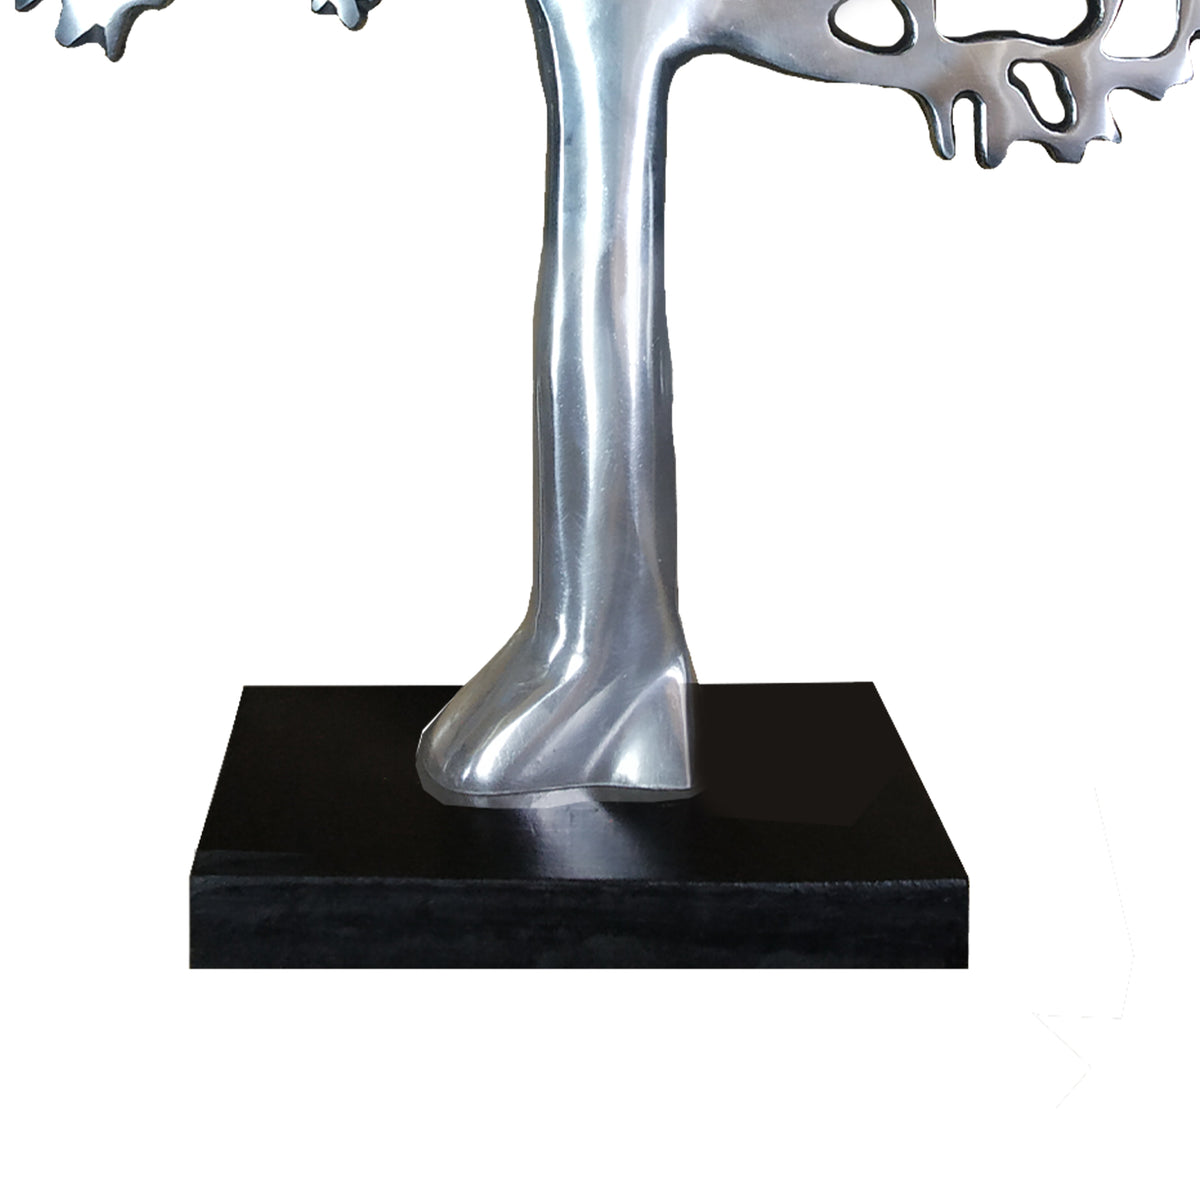 Stylish Aluminum Tree Decor with Block Base, Silver and Black - BM01183